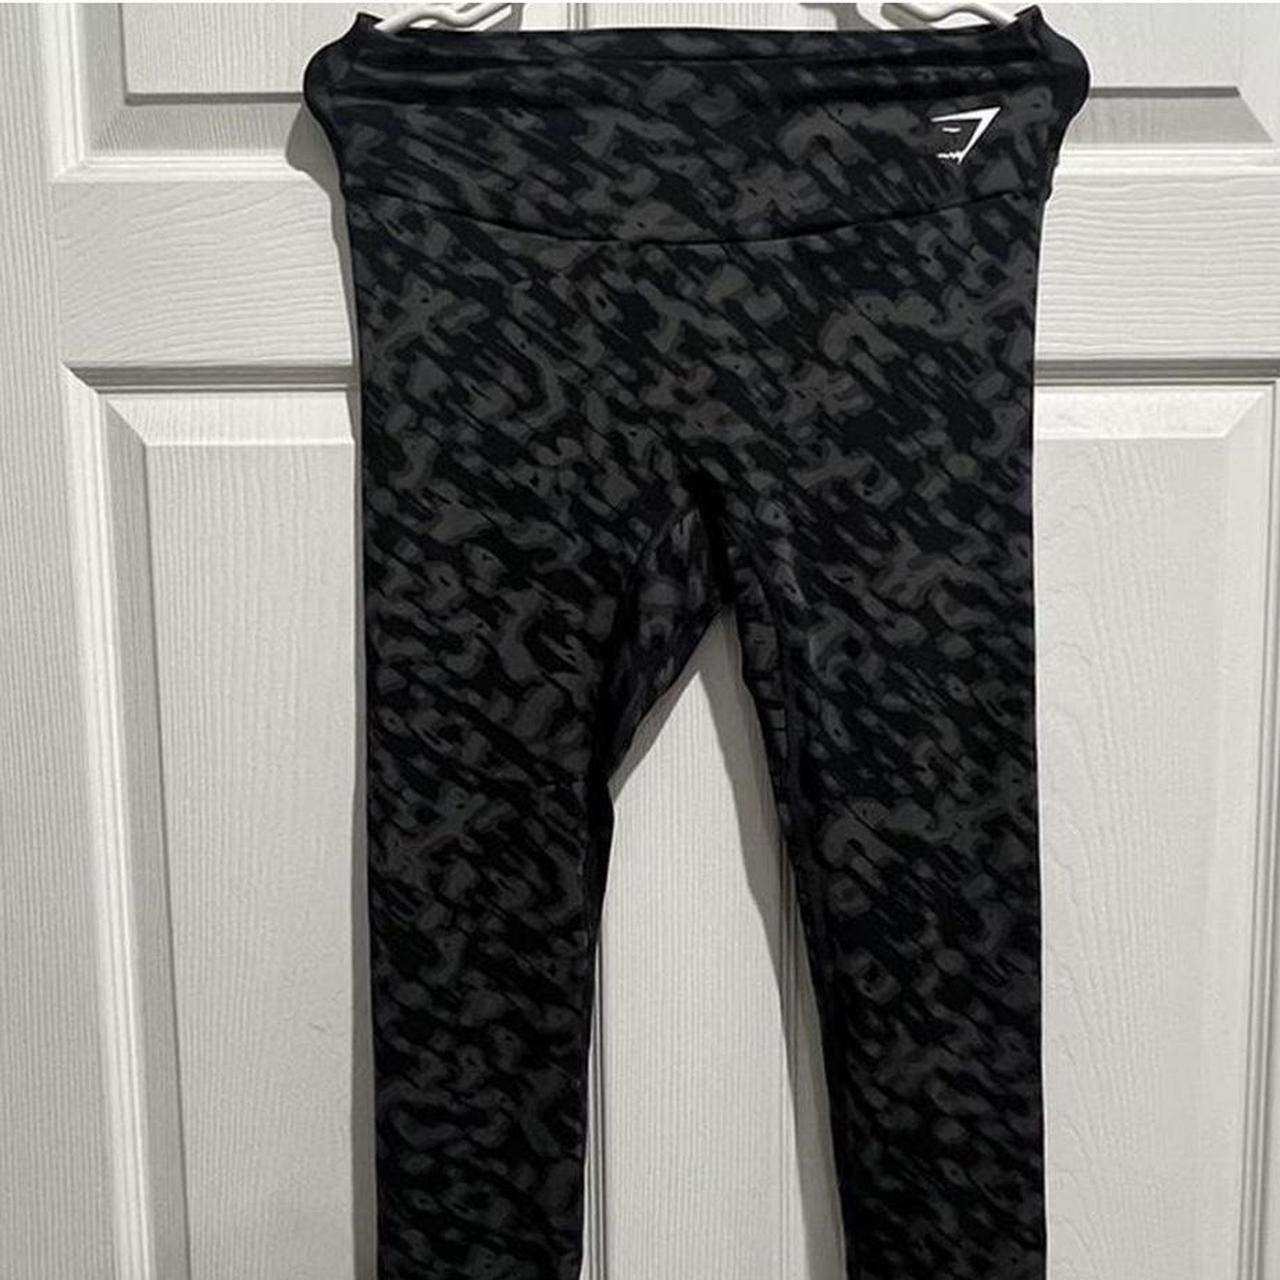 grey black camo gym shark leggings size L never worn - Depop